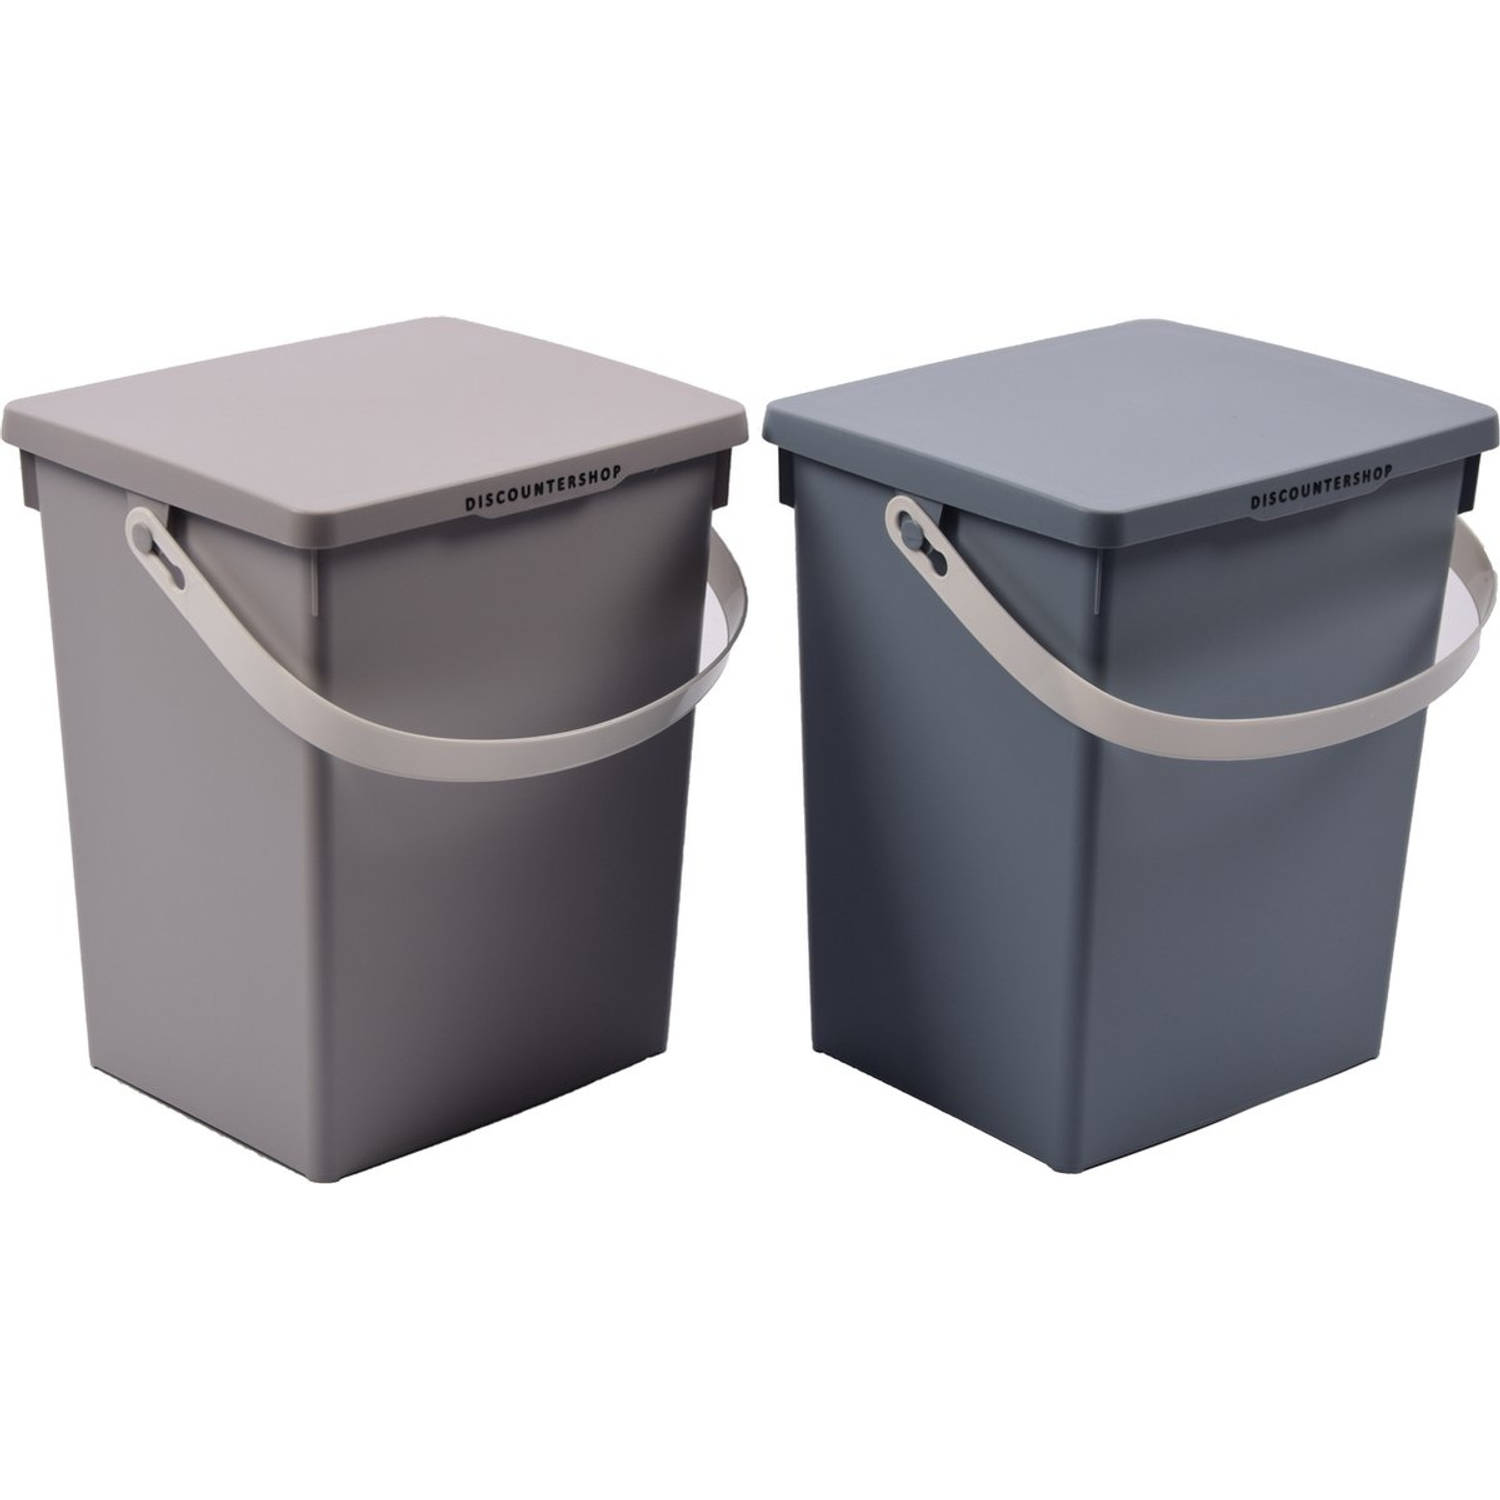 Discountershop® 2x Opbergbox Afsluitbare Multibox 4.5 Liter 23x16x13.5 Cm Grijs-blauw